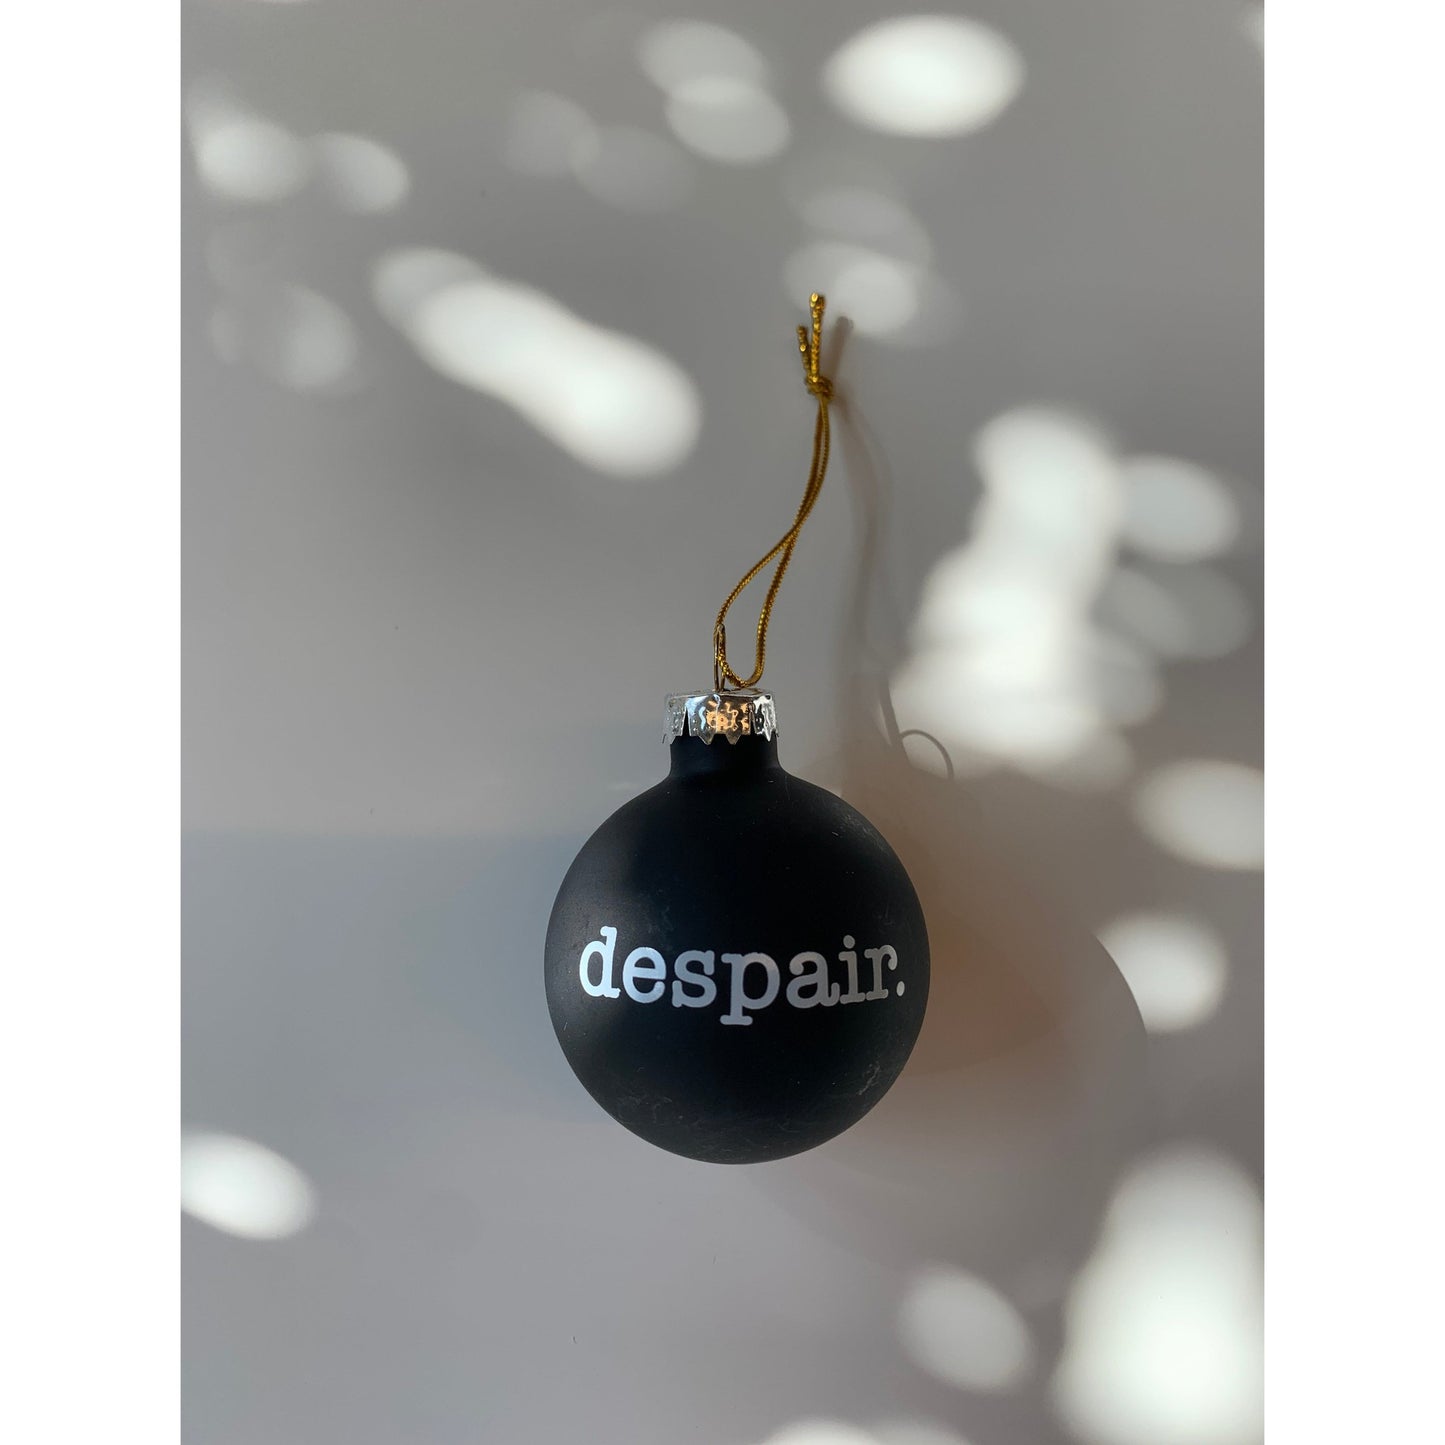 Despair Holiday Mini Glass Ornament in Black